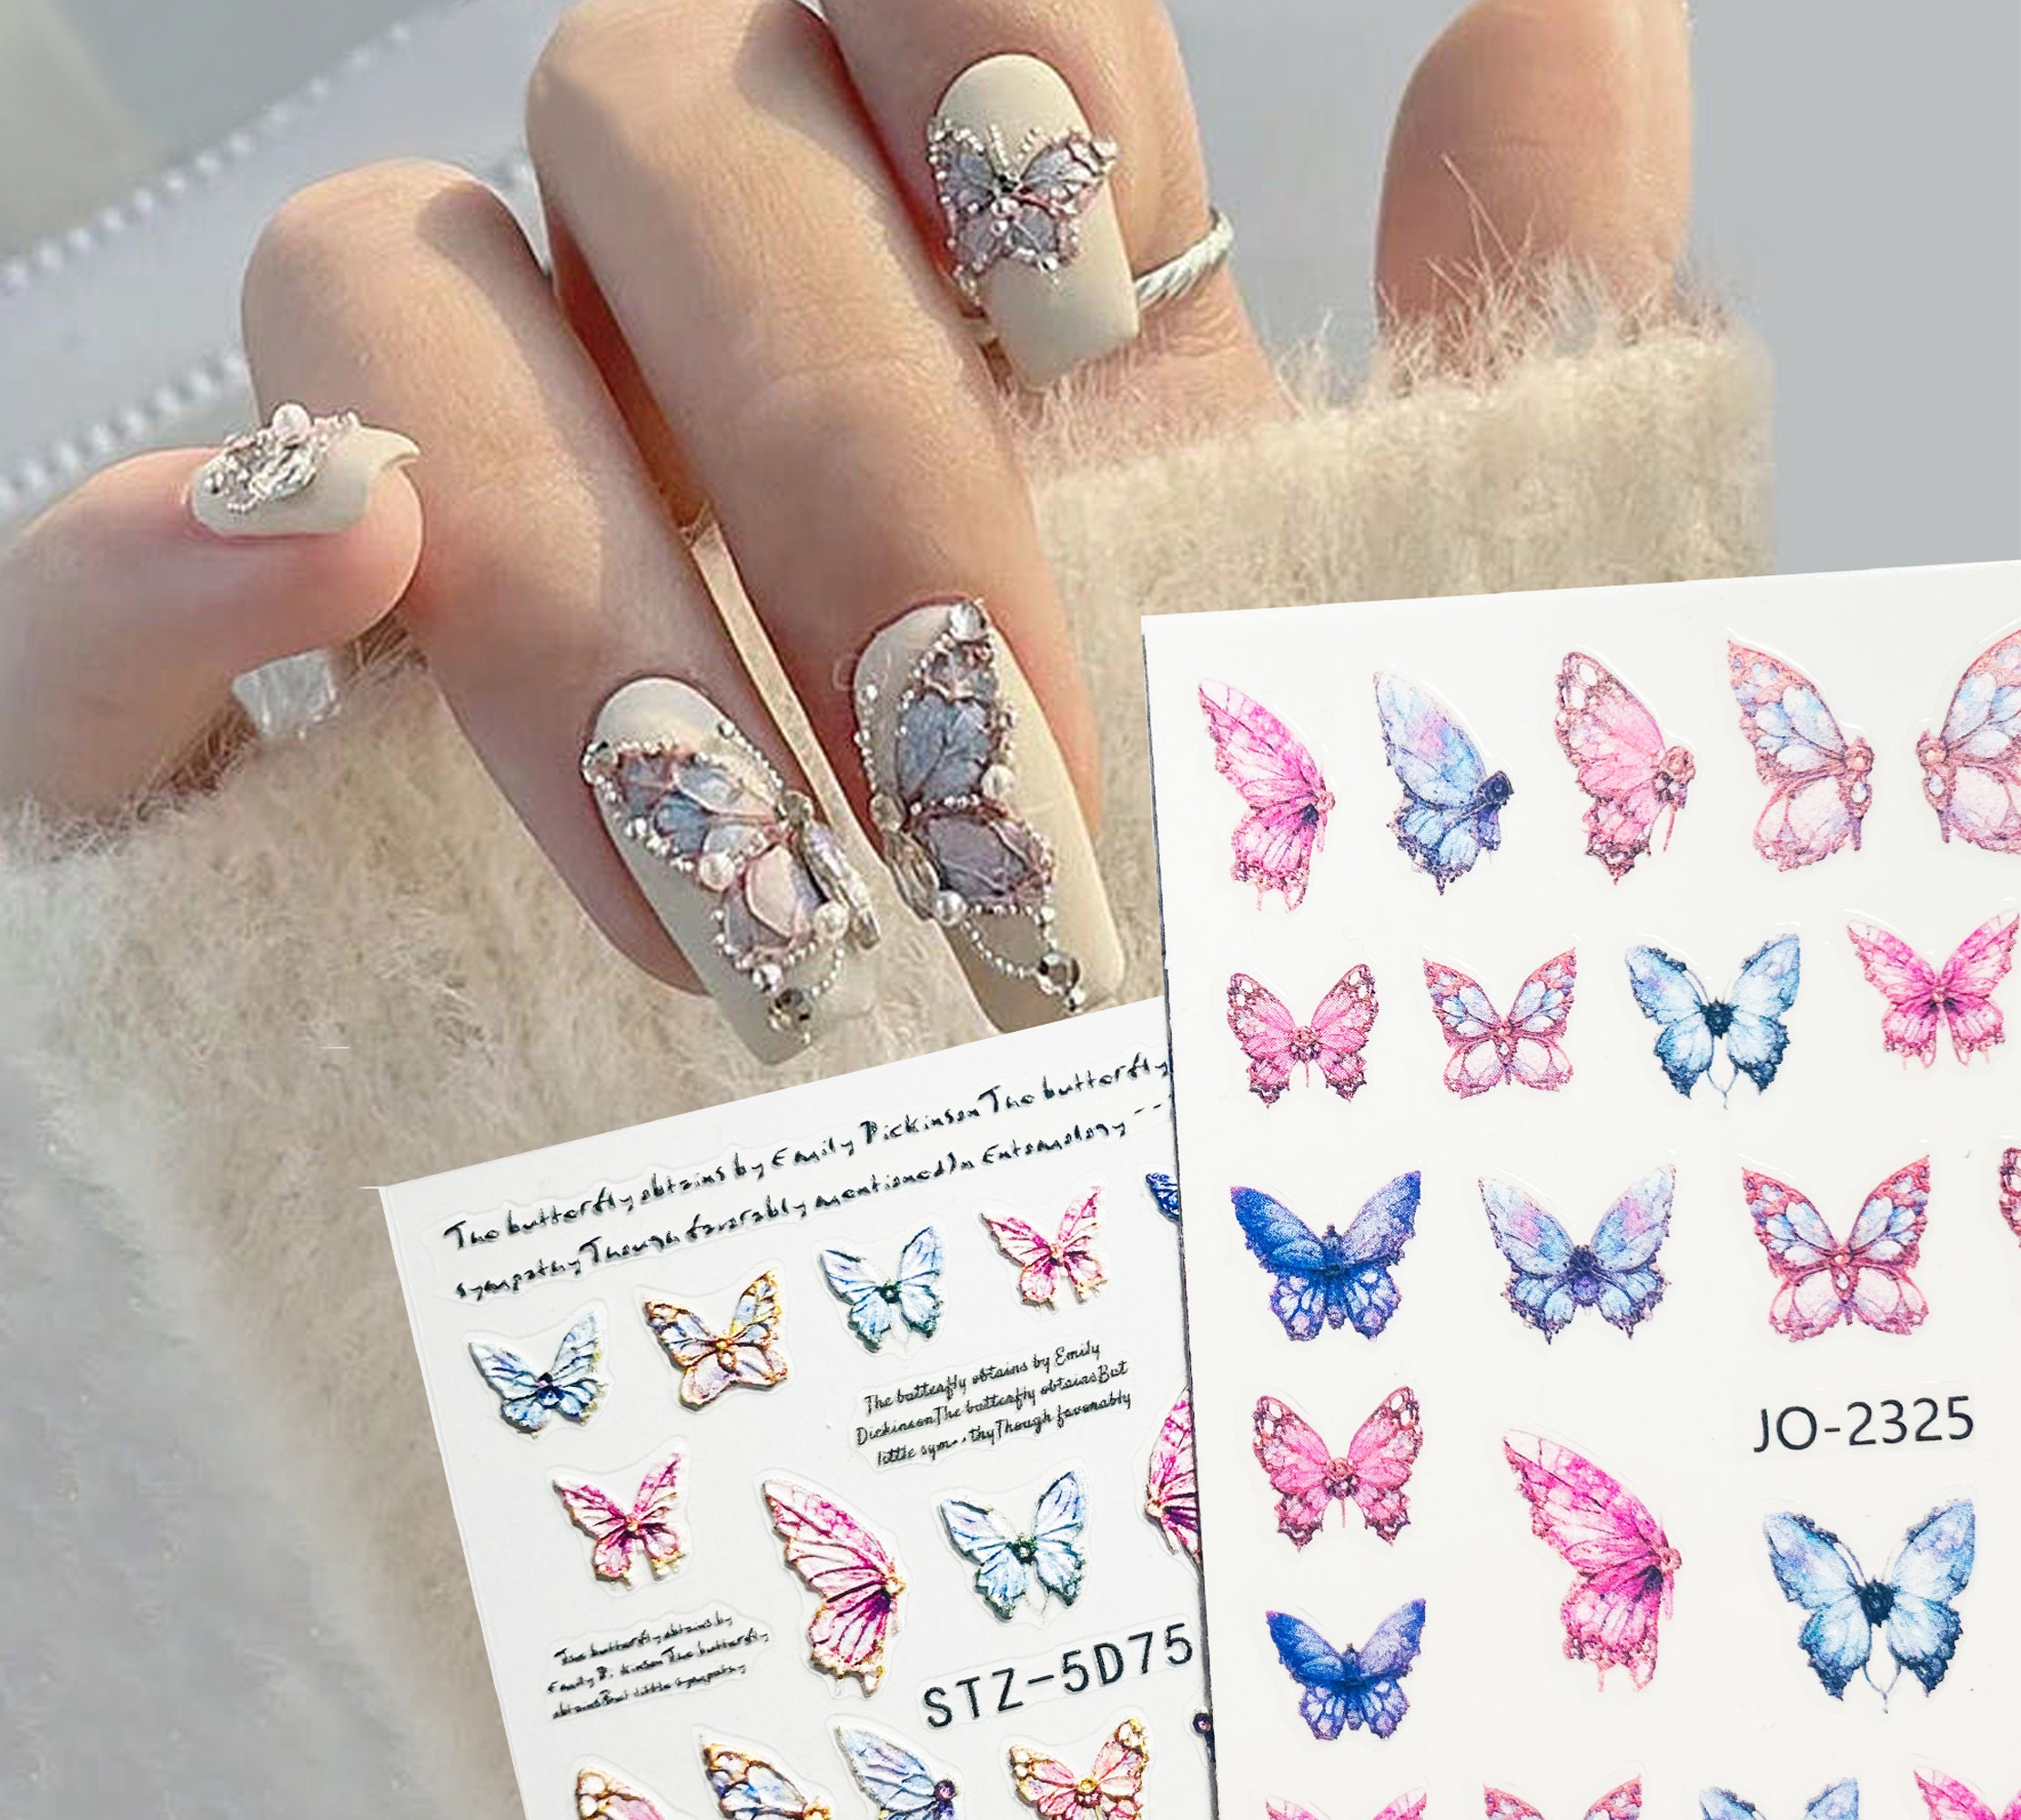 5Pcs 3D Zircon Butterfly Wings Nail Art Charms Fairy Crystal Gem